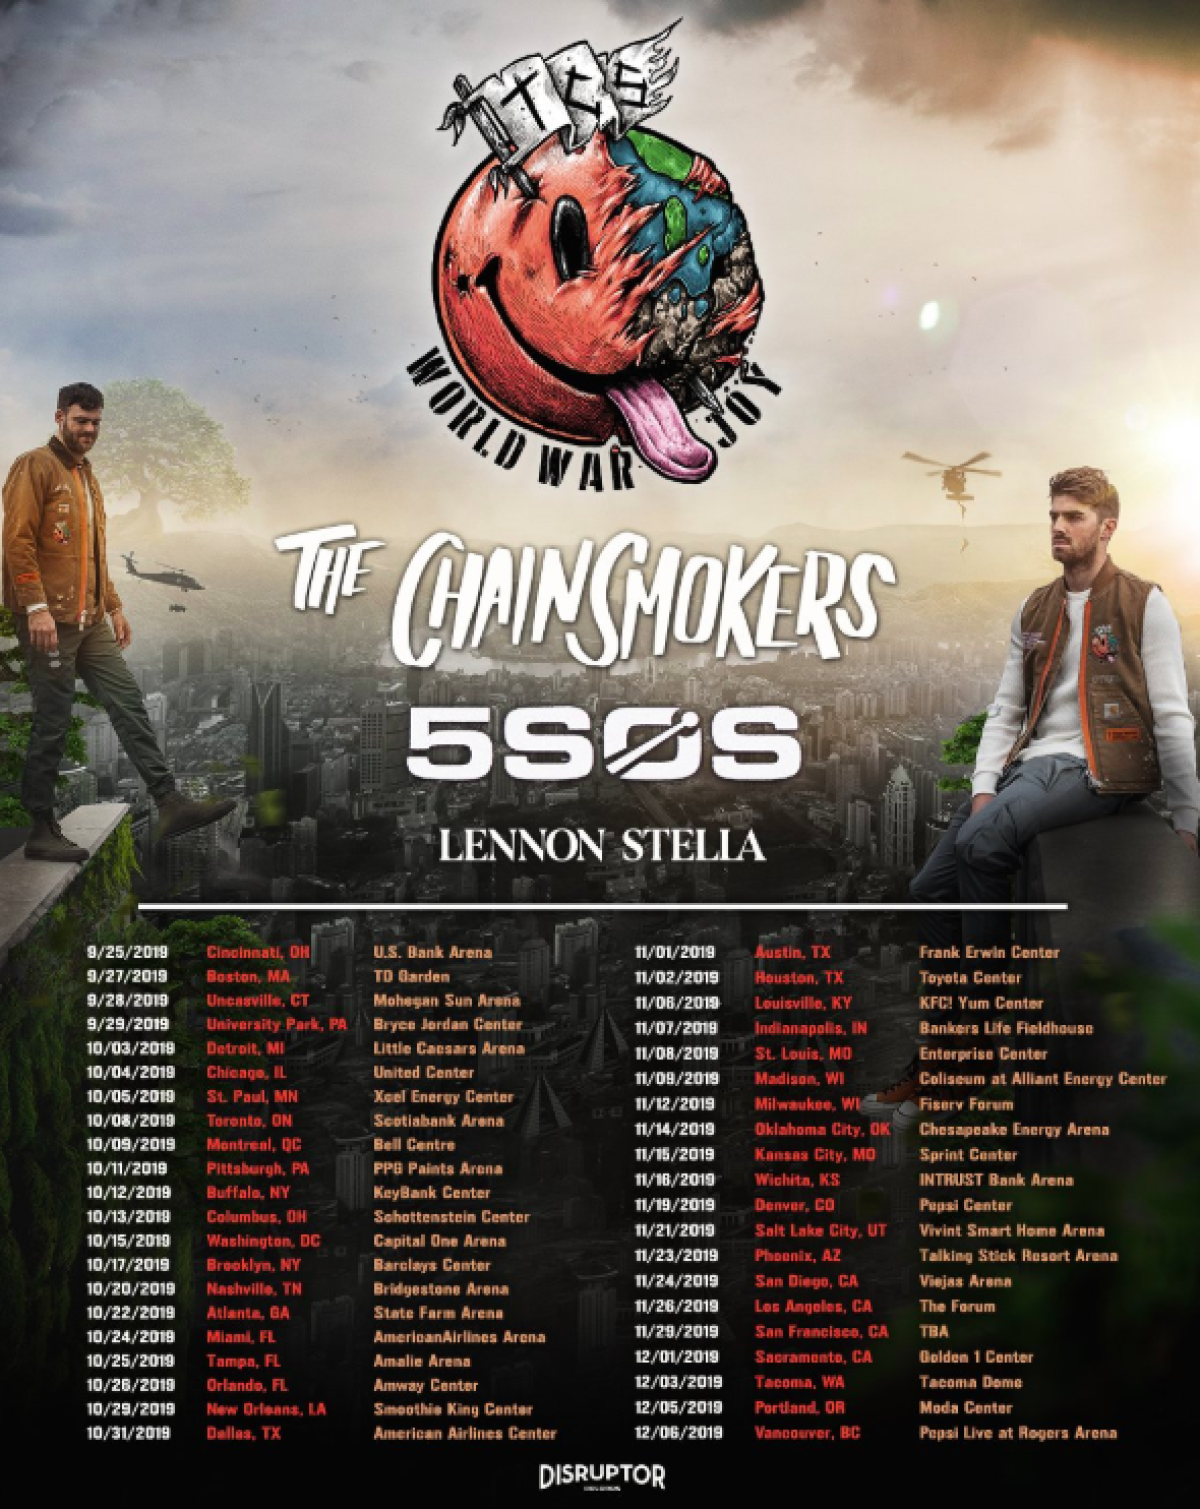 5SOS & Chainsmokers Tour Dates